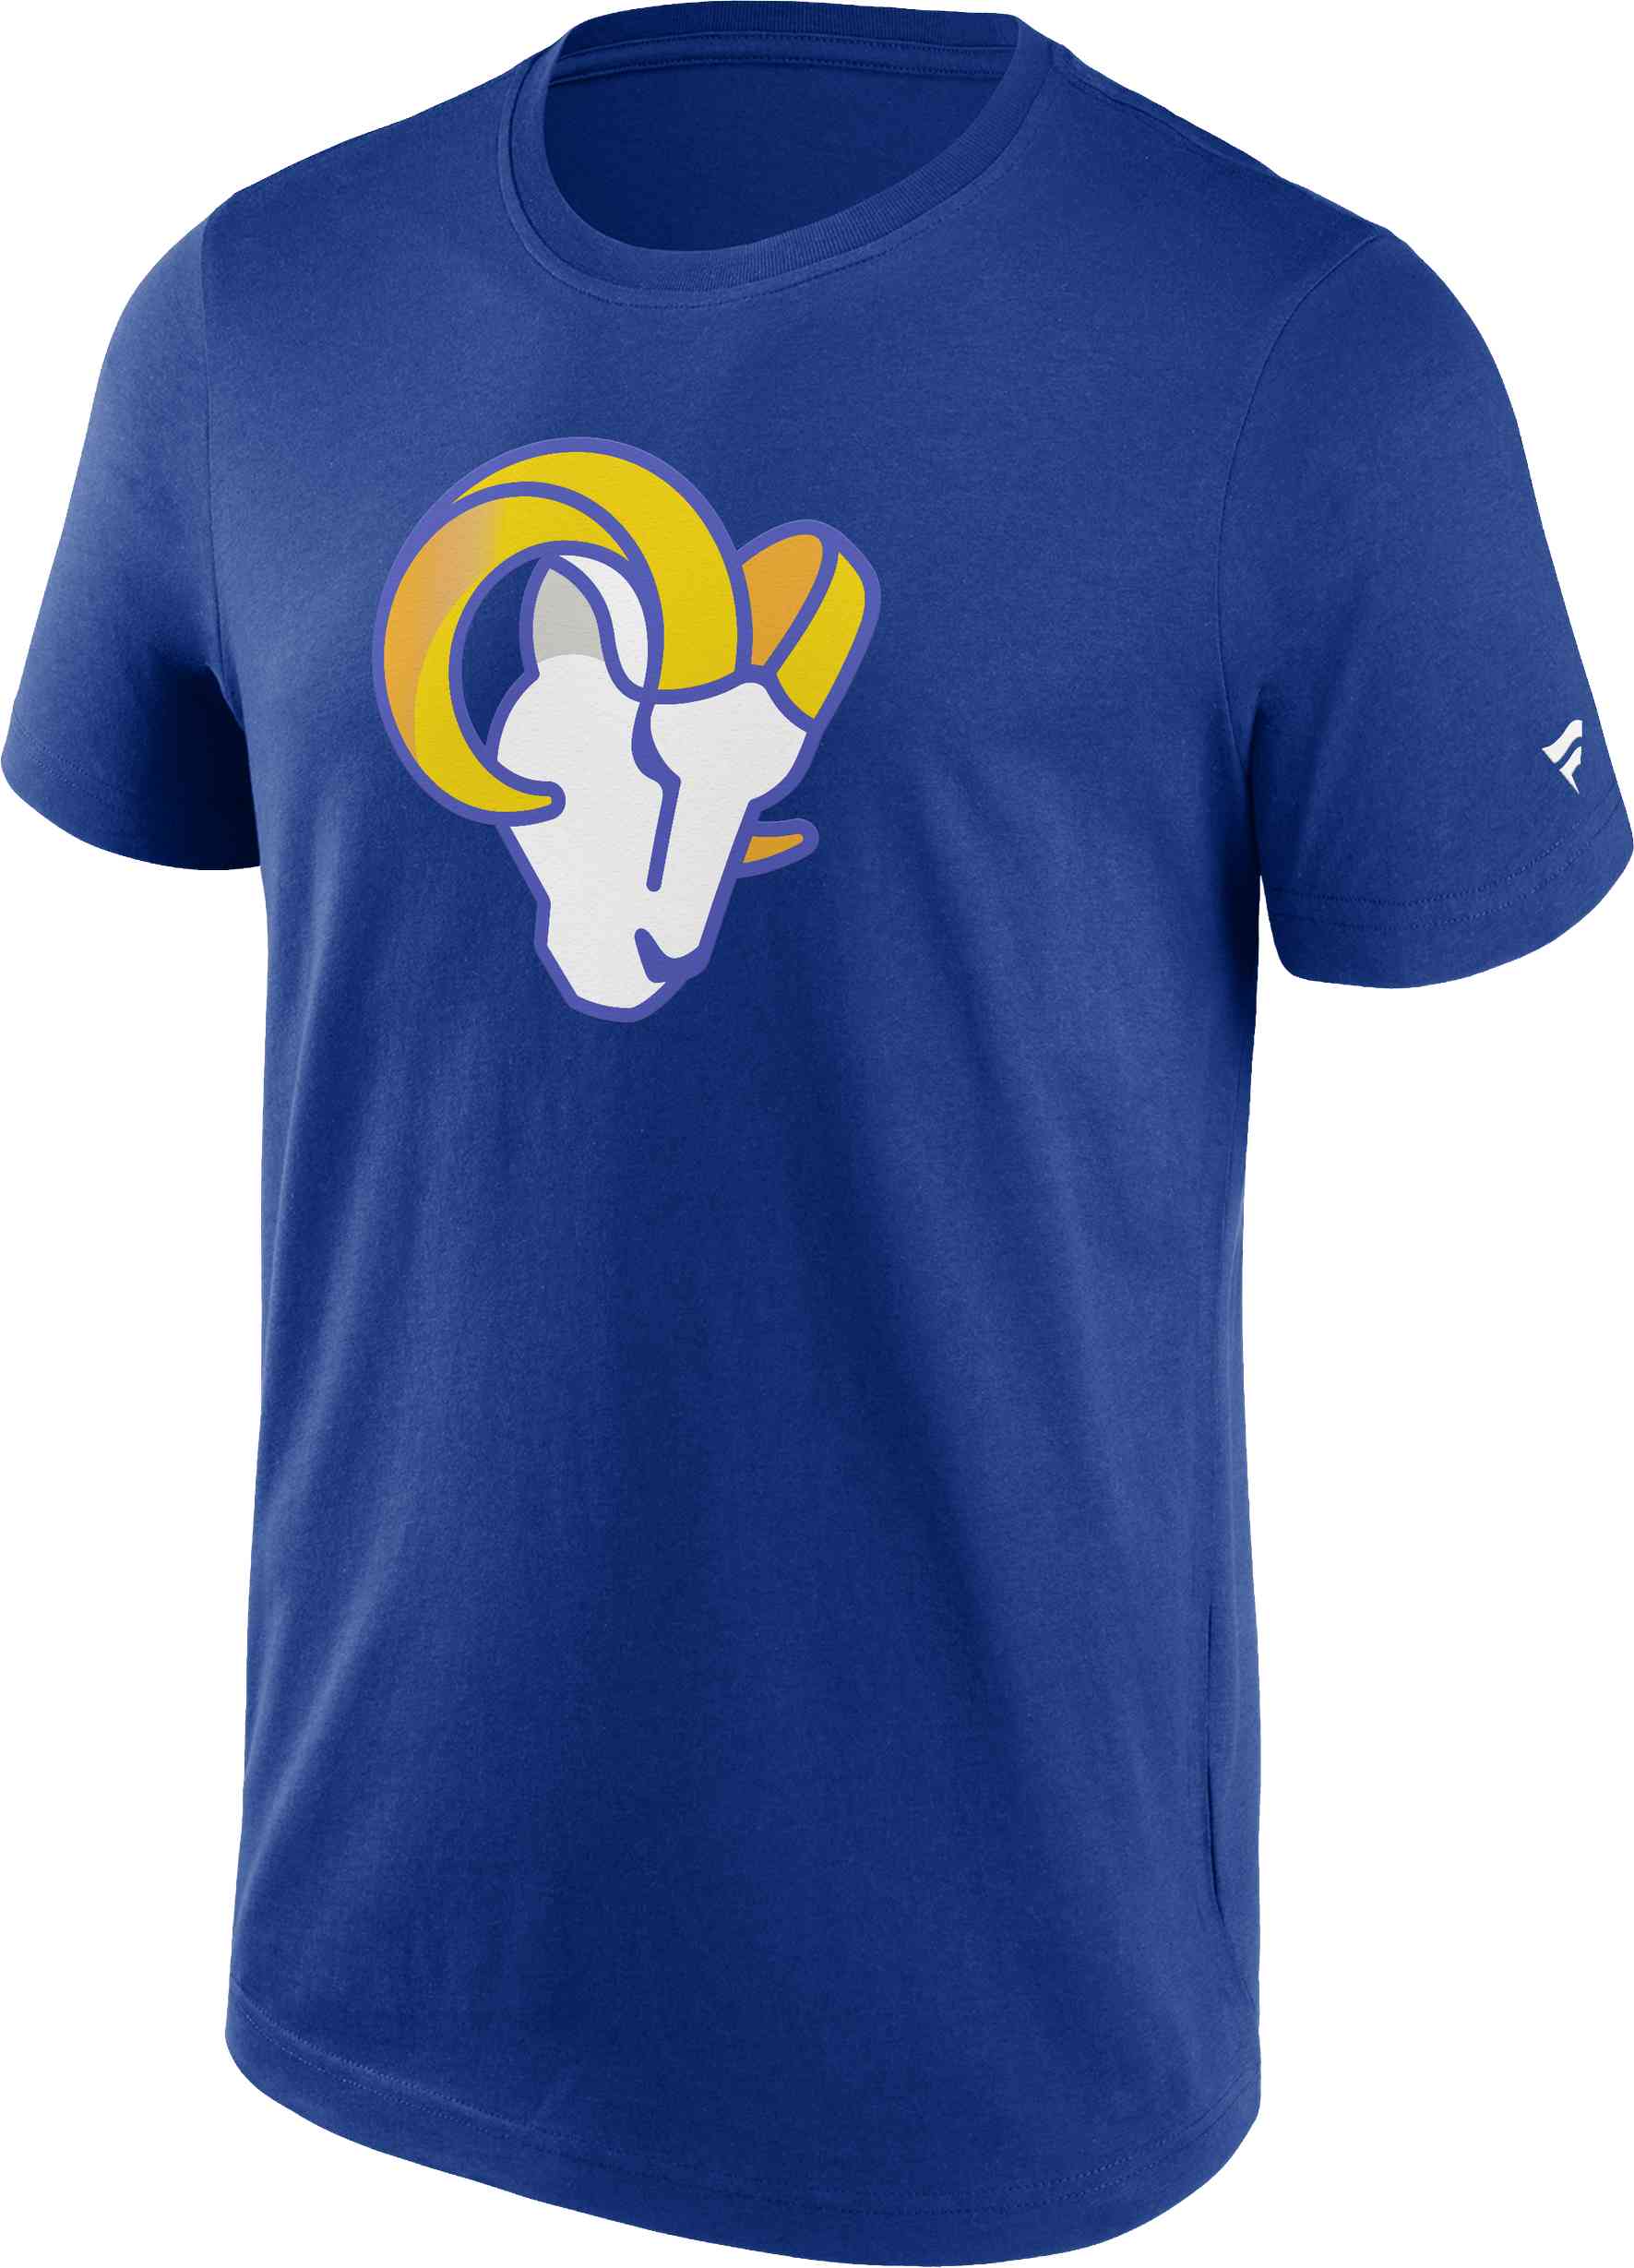 Fanatics - NFL Los Angeles Rams Primary Logo Graphic T-Shirt